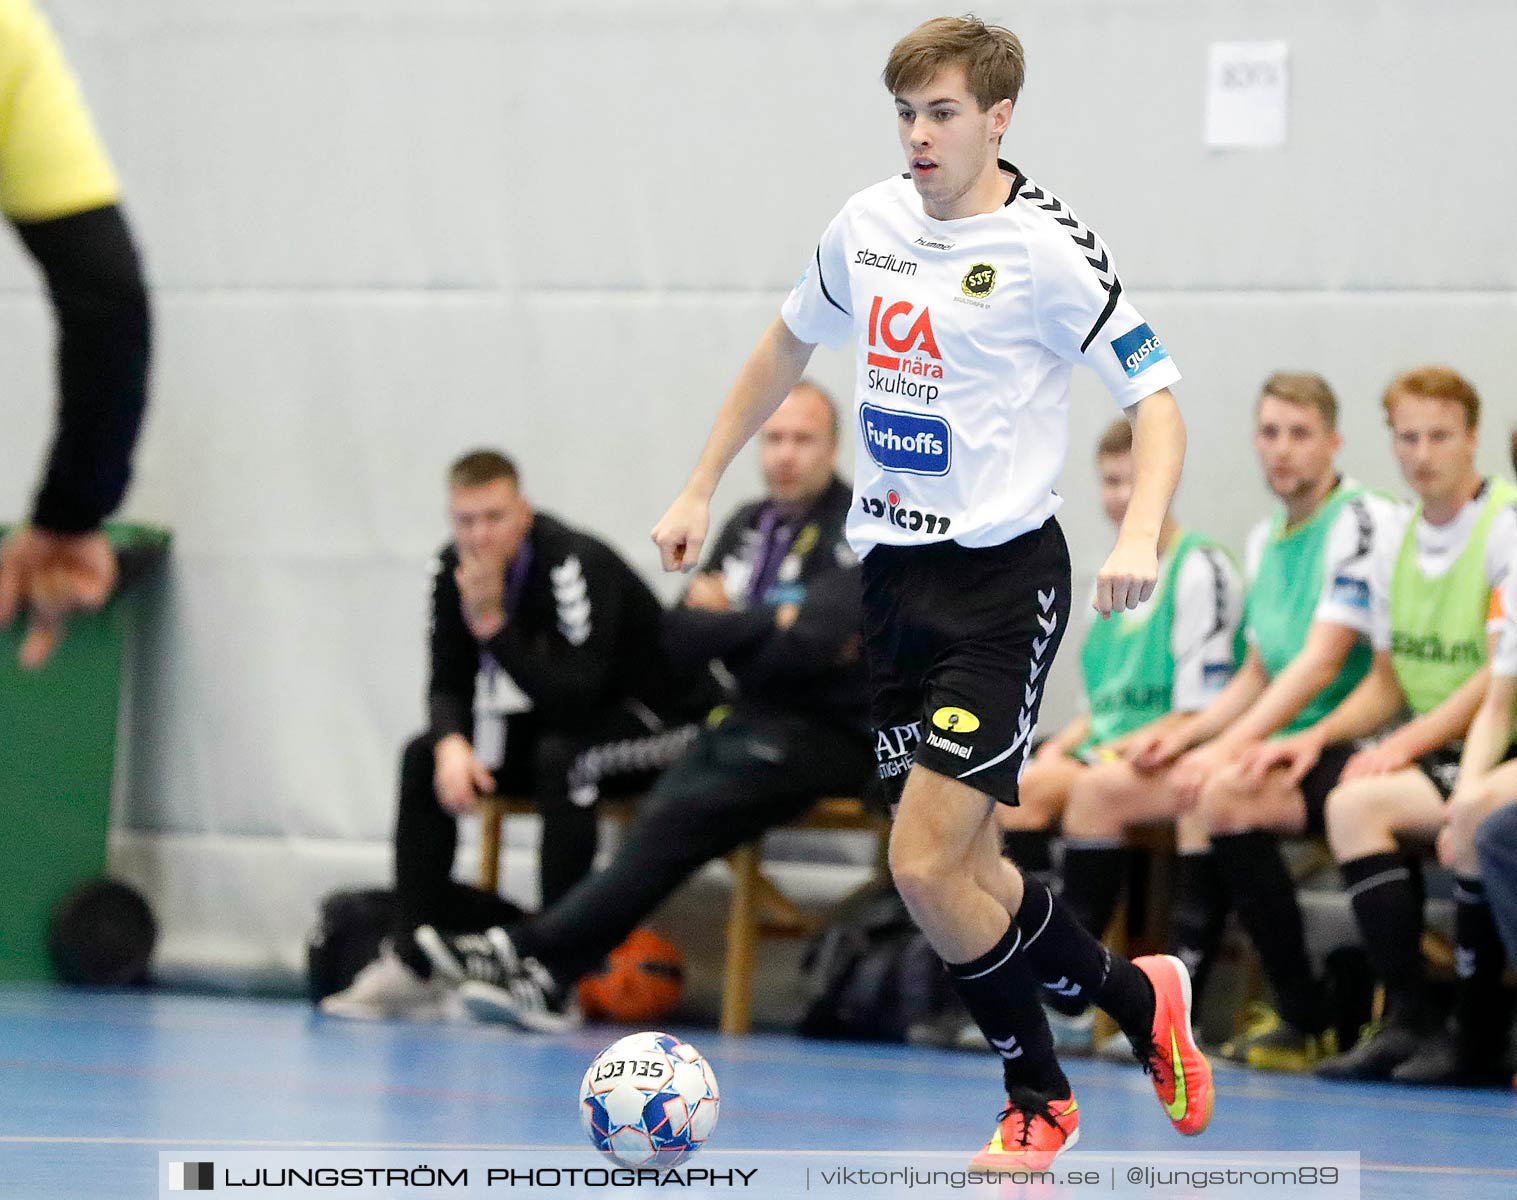 Skövde Futsalcup 2019 Herrar Elastico Futsal Club-Skultorps IF,herr,Arena Skövde,Skövde,Sverige,Futsal,,2019,227336